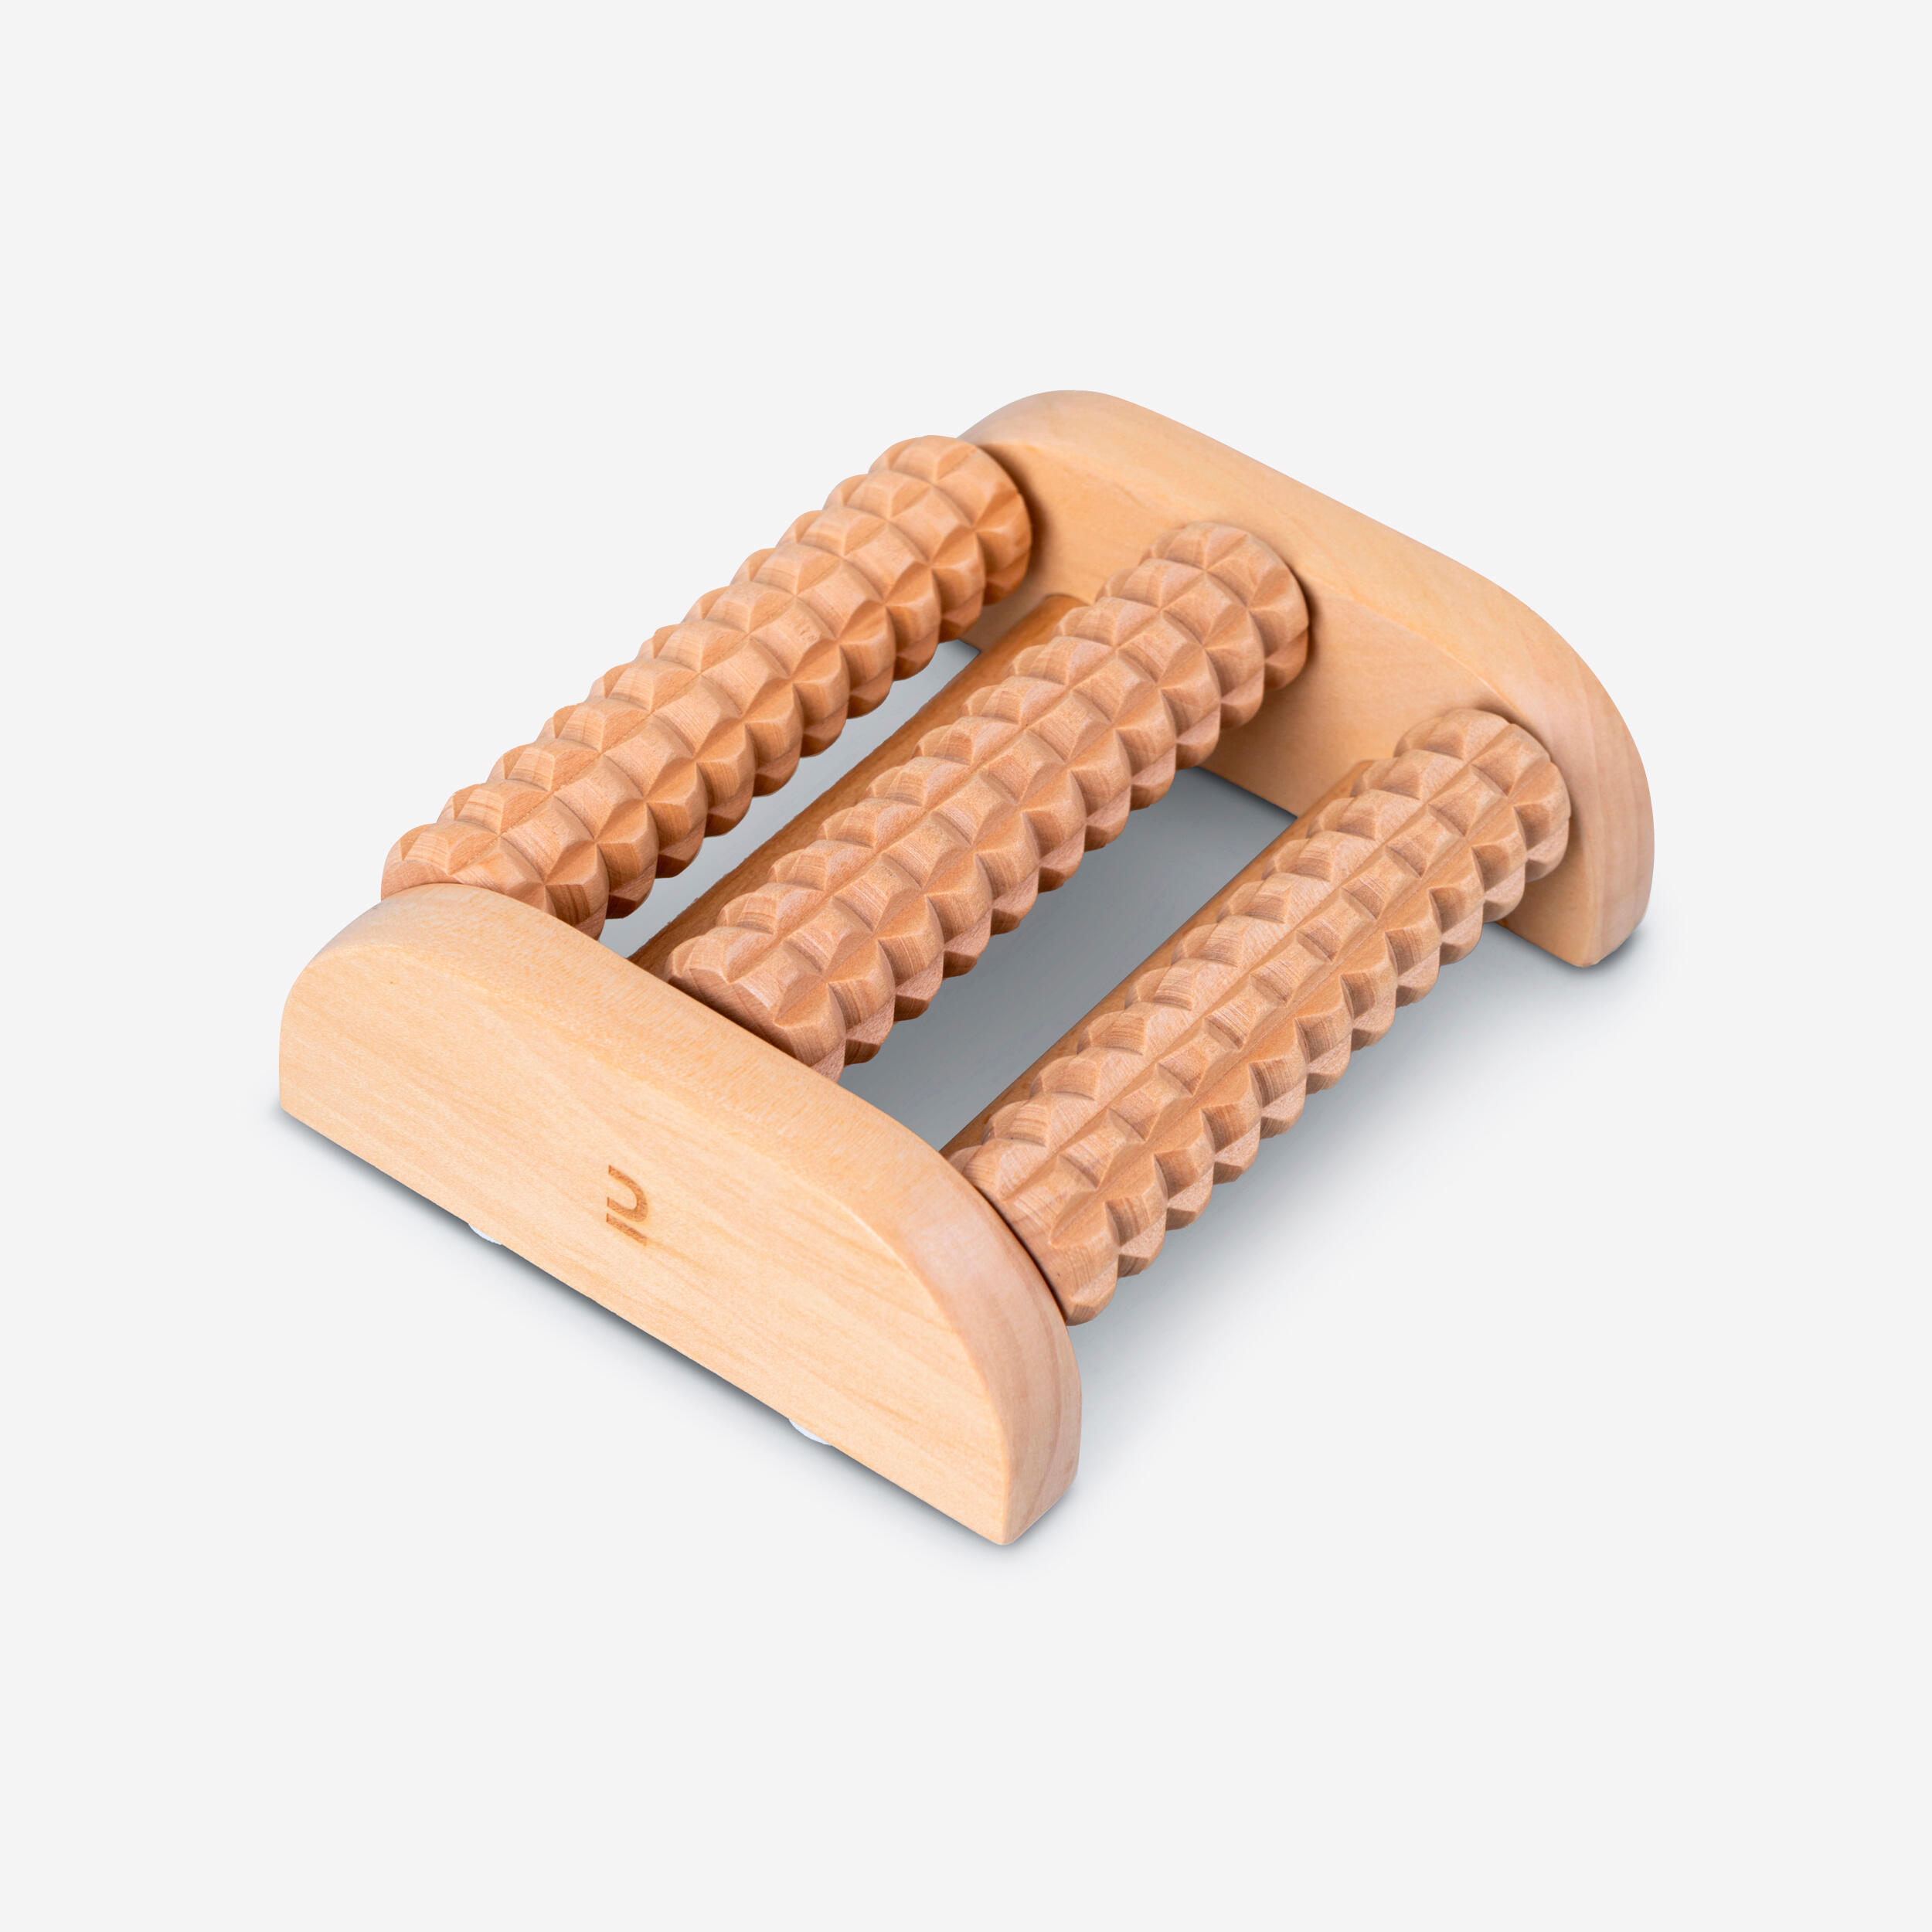 DECATHLON Wooden foot massage tool